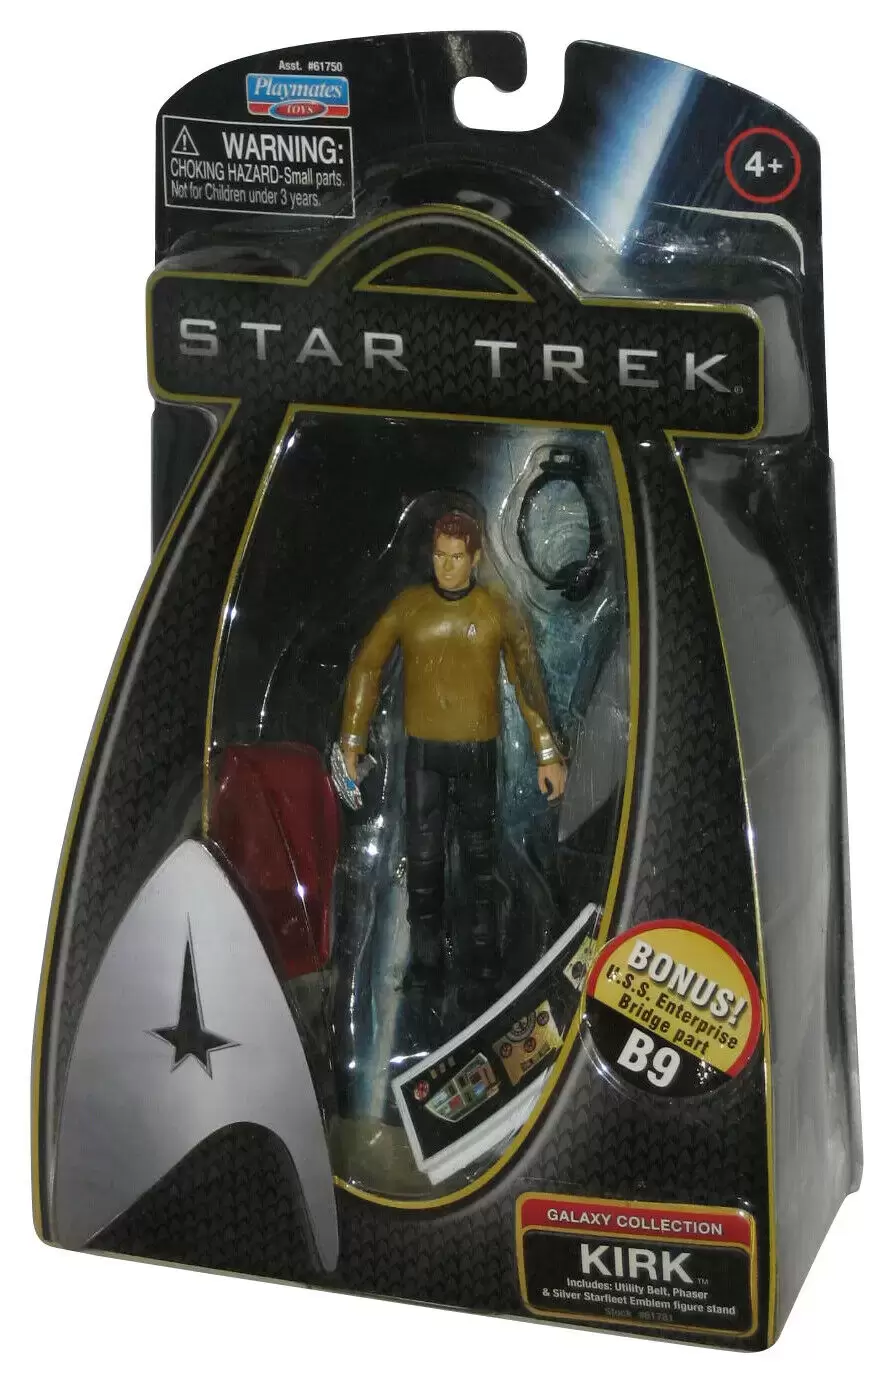 Star Trek - Galaxy Collection - Kirk